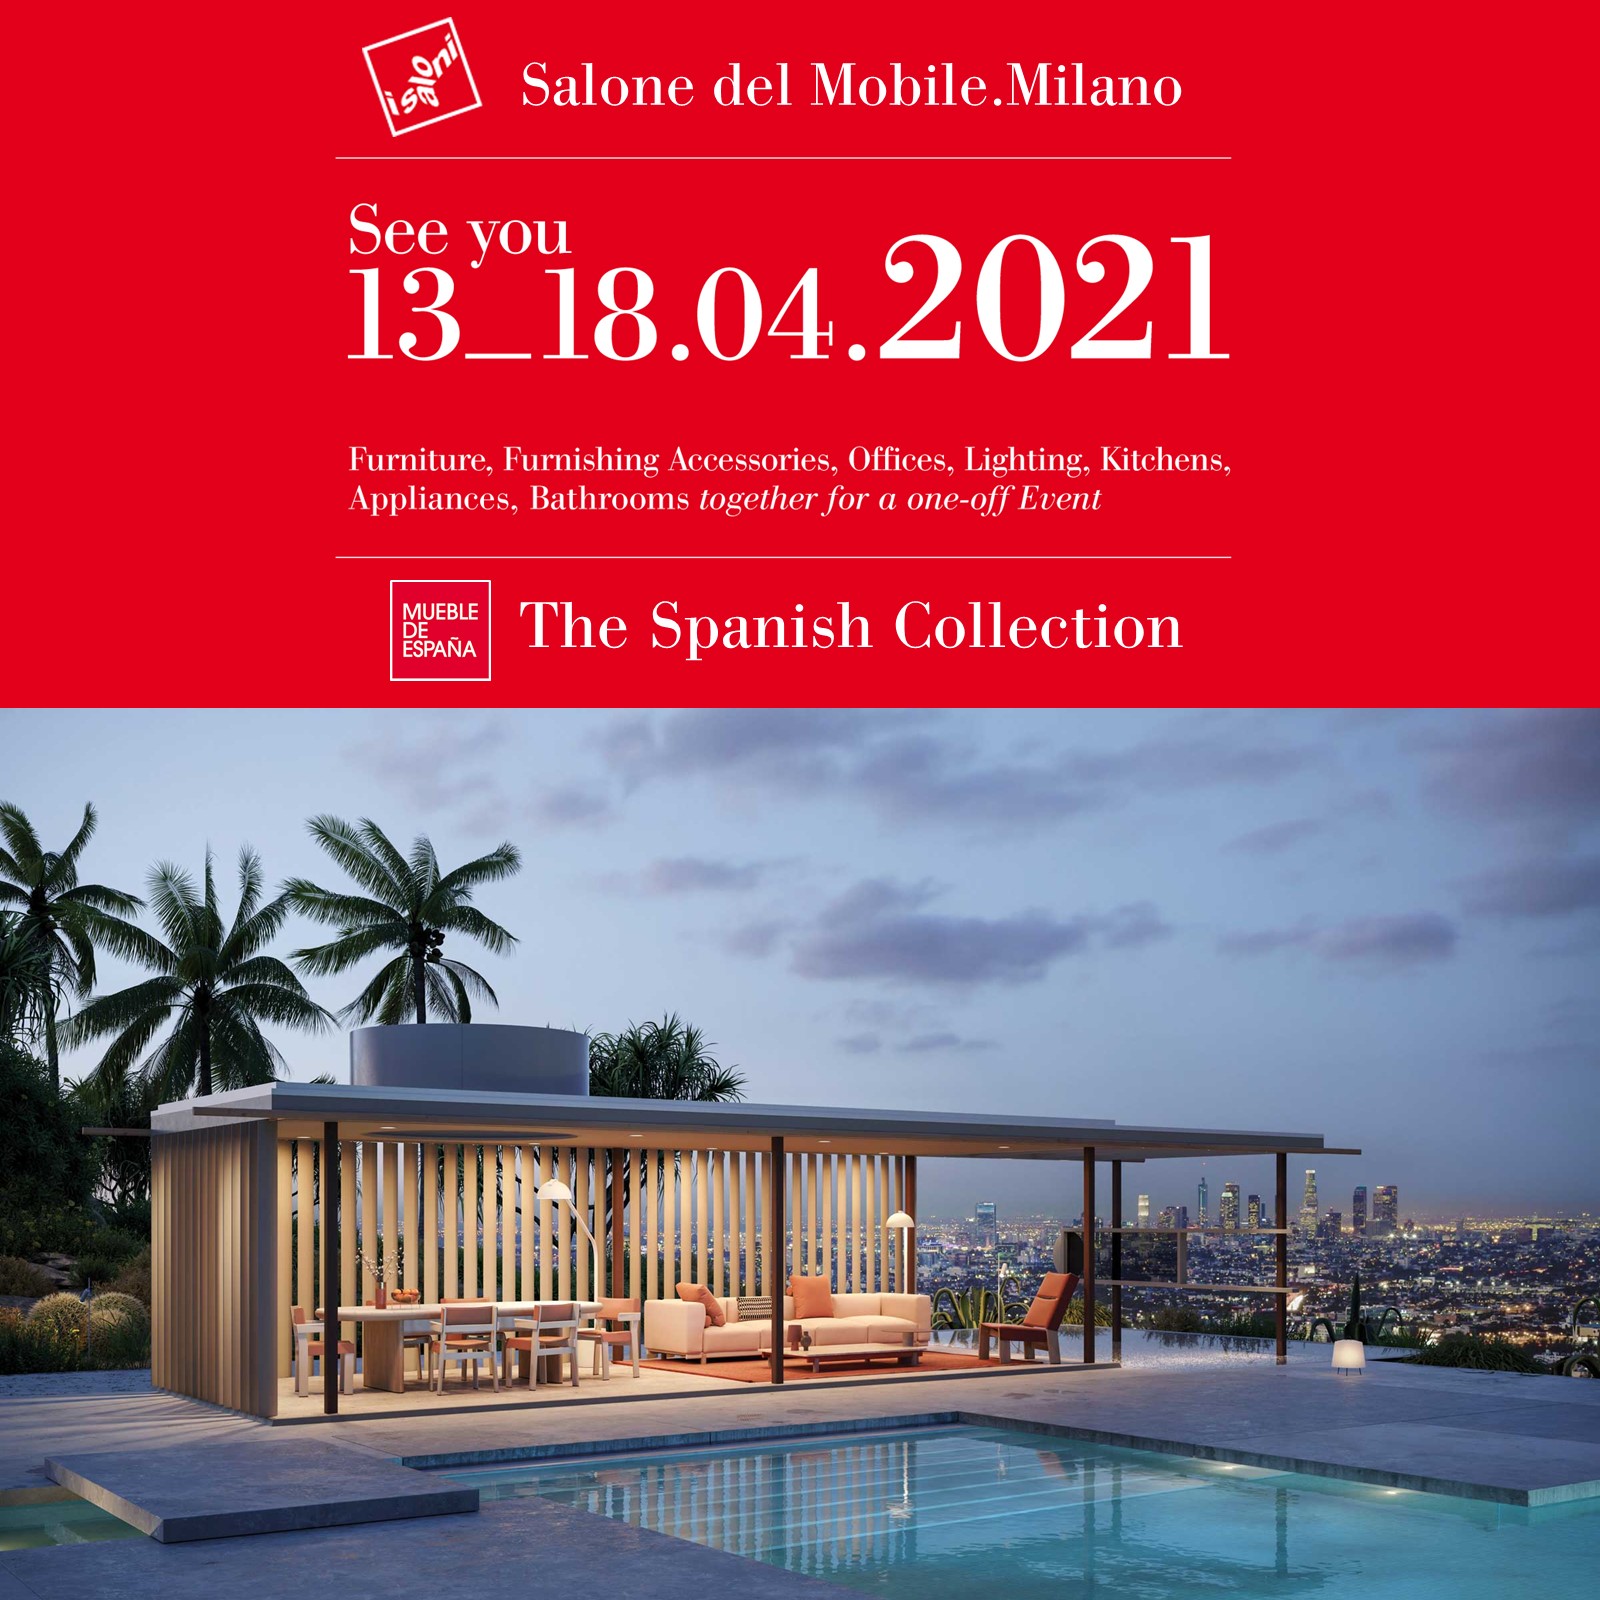 salone-mobile-milano-spanish-collection